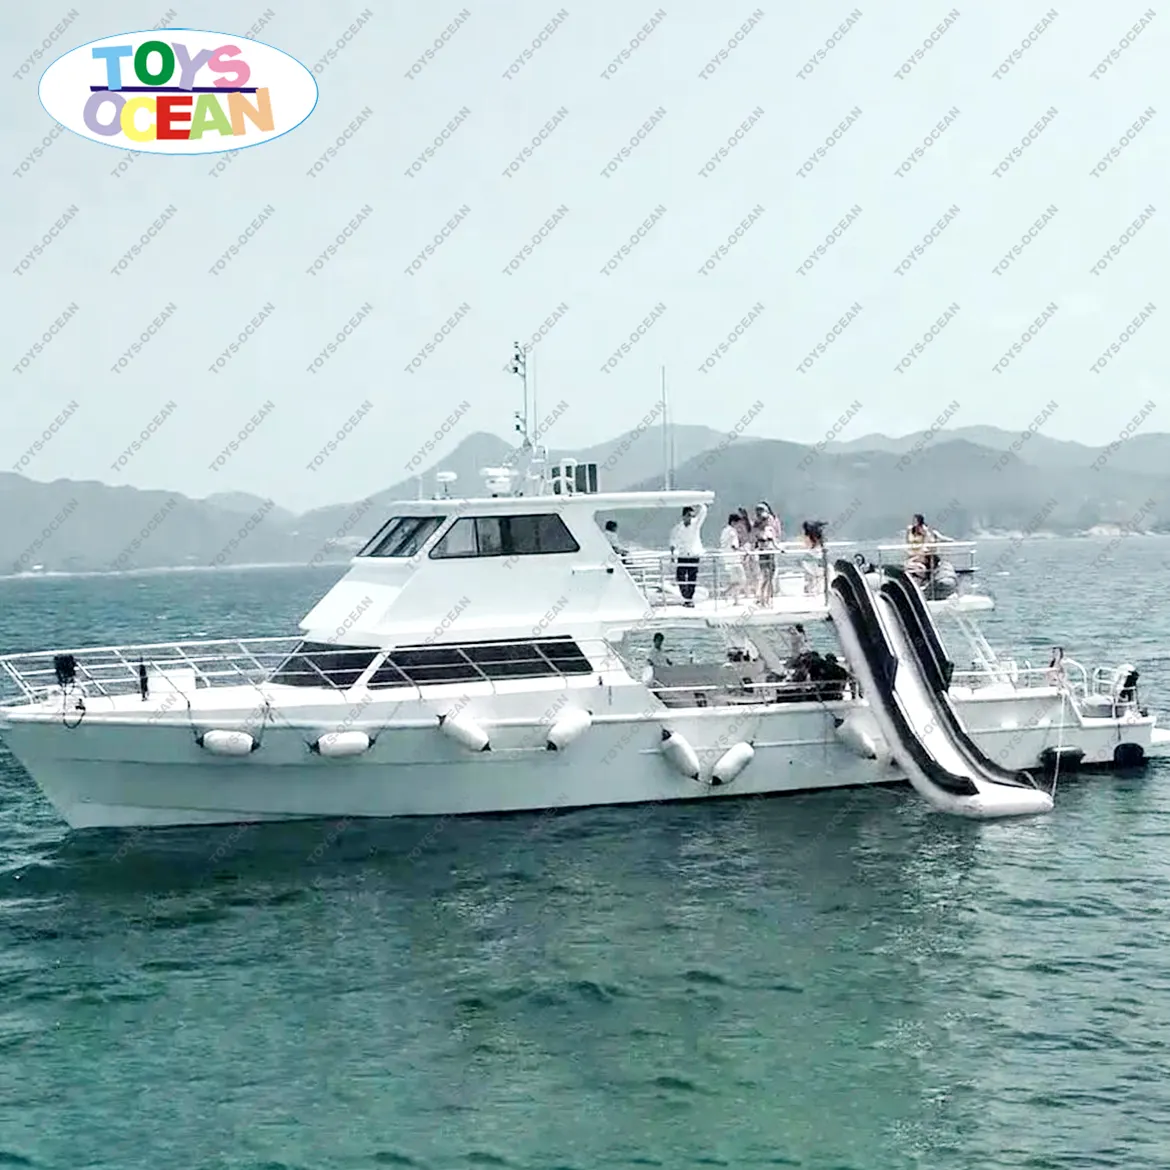 Envío gratuito aire sellado flotante de agua barco diapositiva inflable yate diapositiva para adultos en el mar